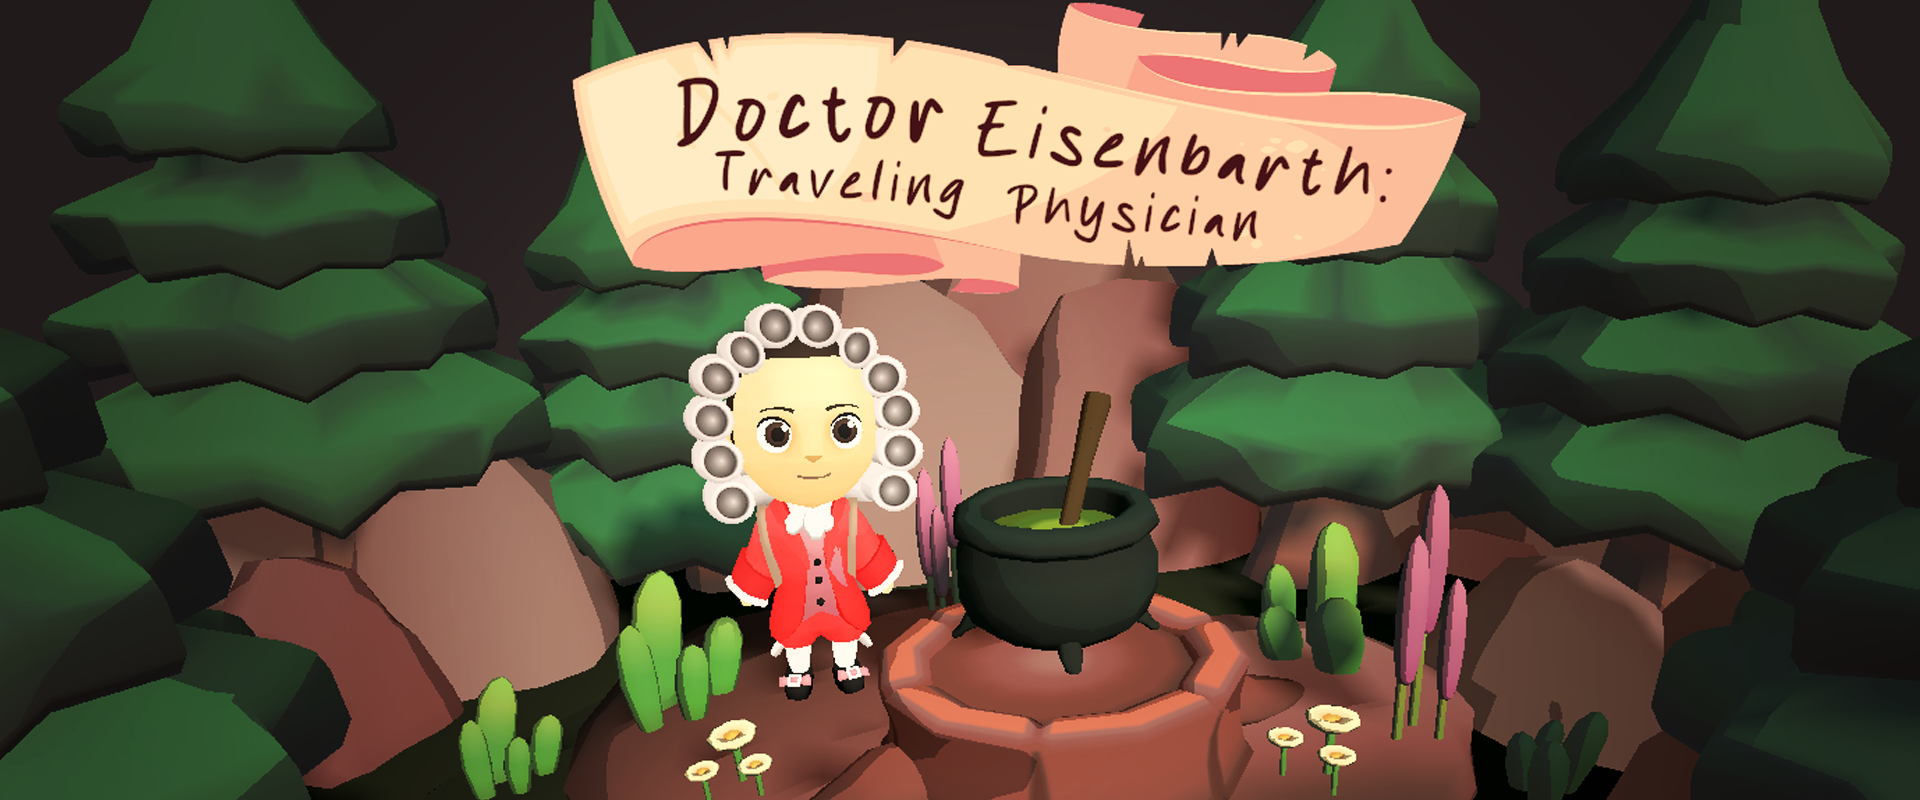 Doctor Eisenbarth: Traveling Physician